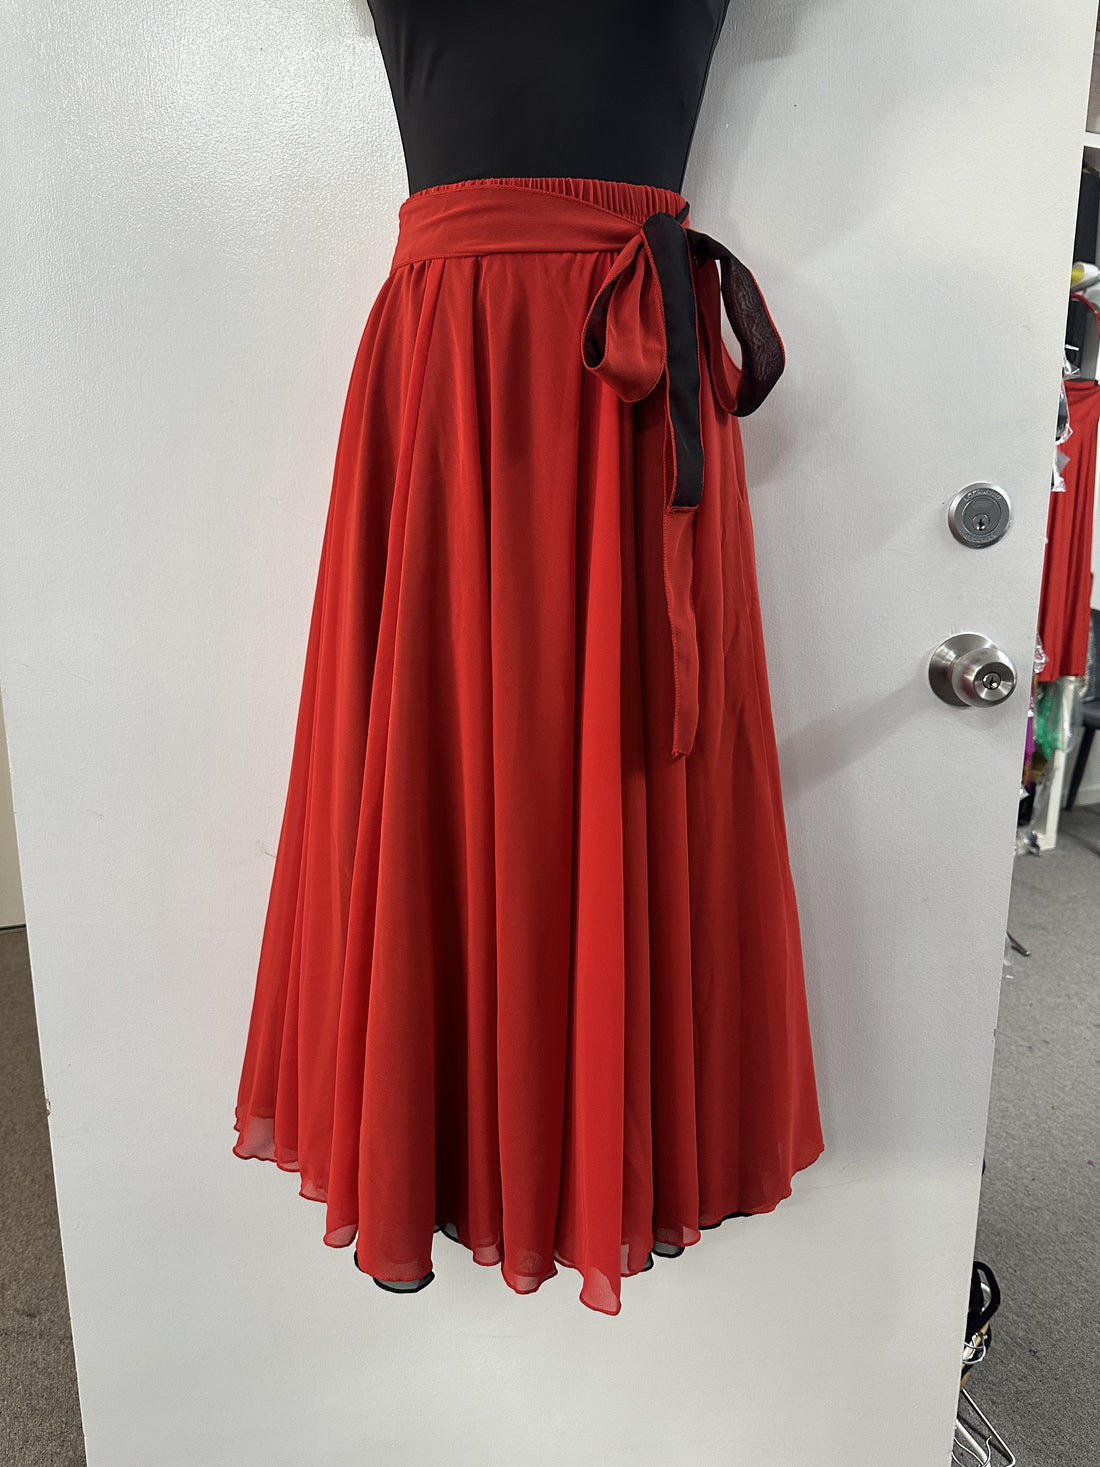 Red Chiffon with Black Ballroom Skirt